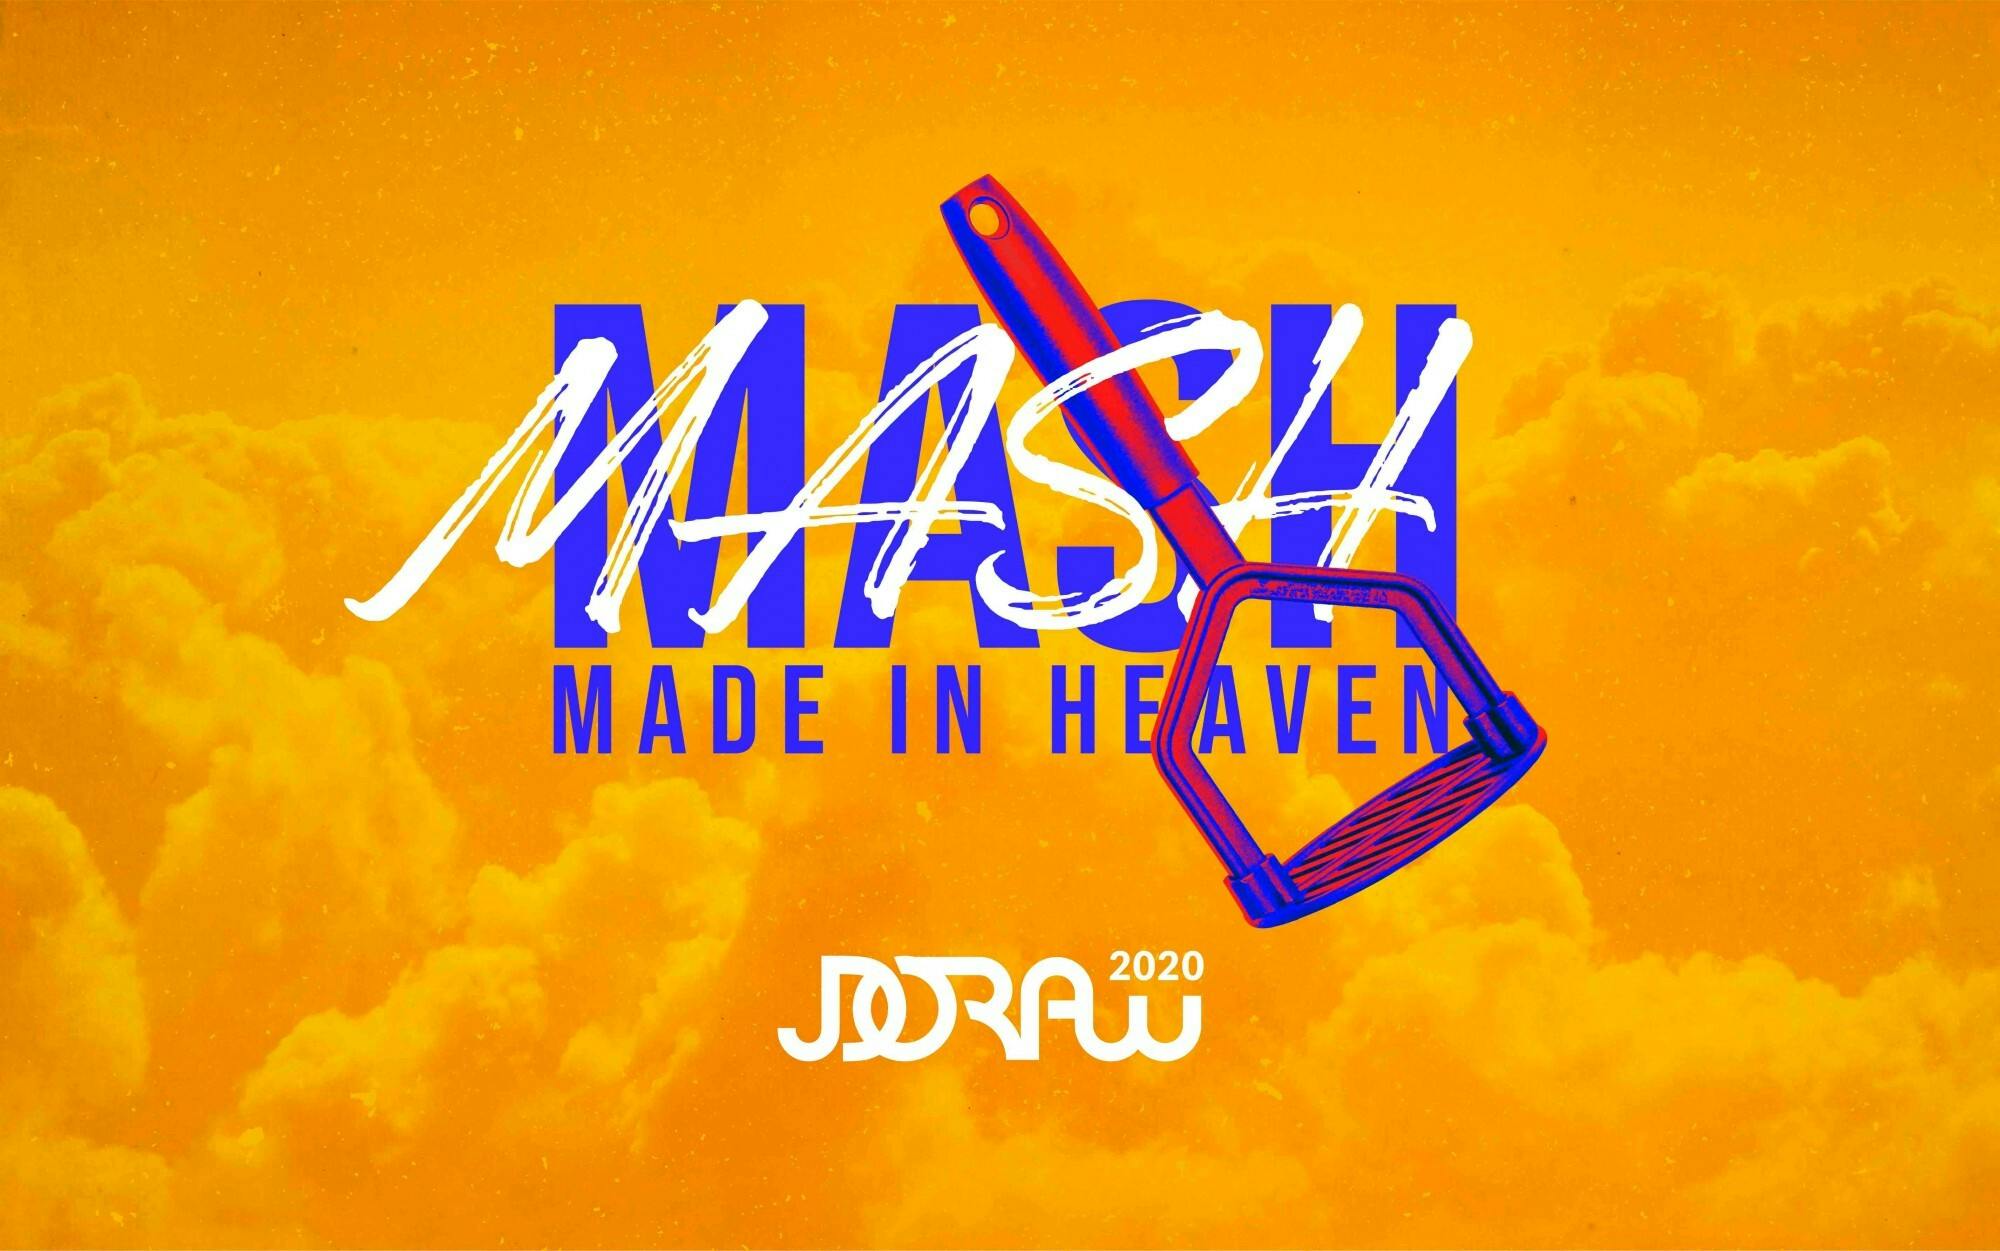 Mash made in heaven initiative image